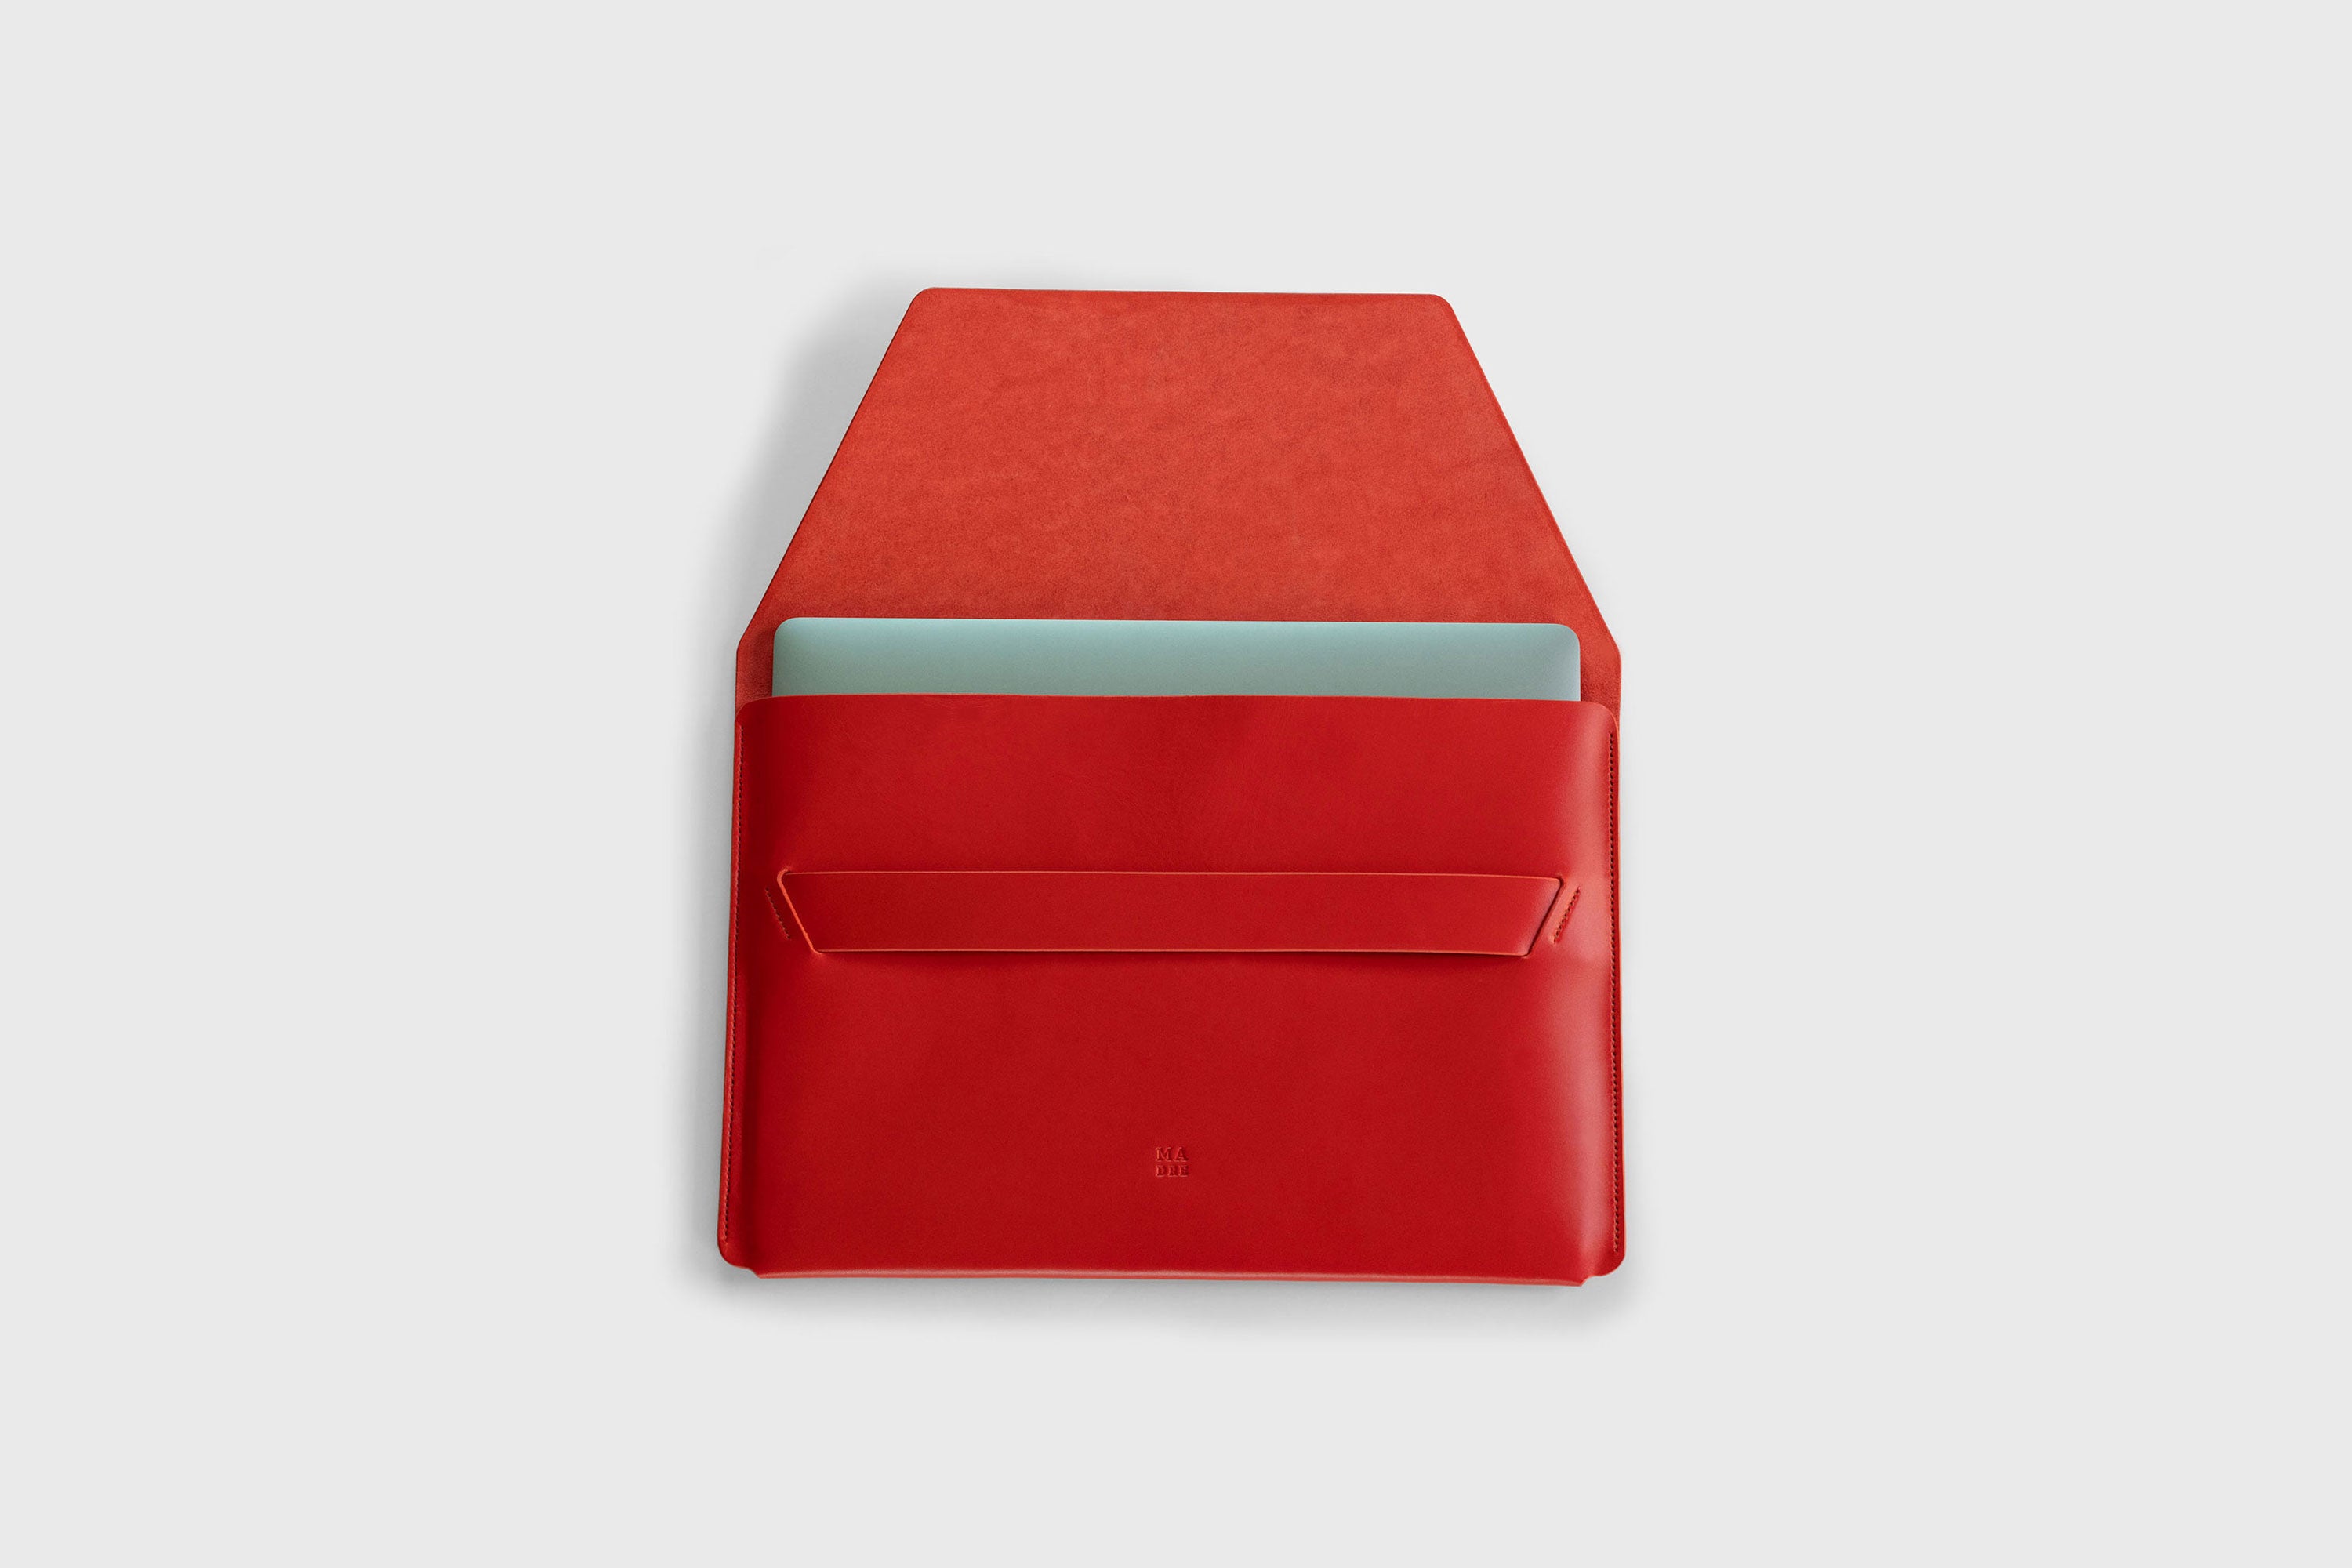 MacBook Air 13 Inch Leather Sleeve Case Red Full Grain Premium Real Leather Minimalistic Design Handmade Premium Atelier Madre Manuel Dreesmann Barcelona Spain